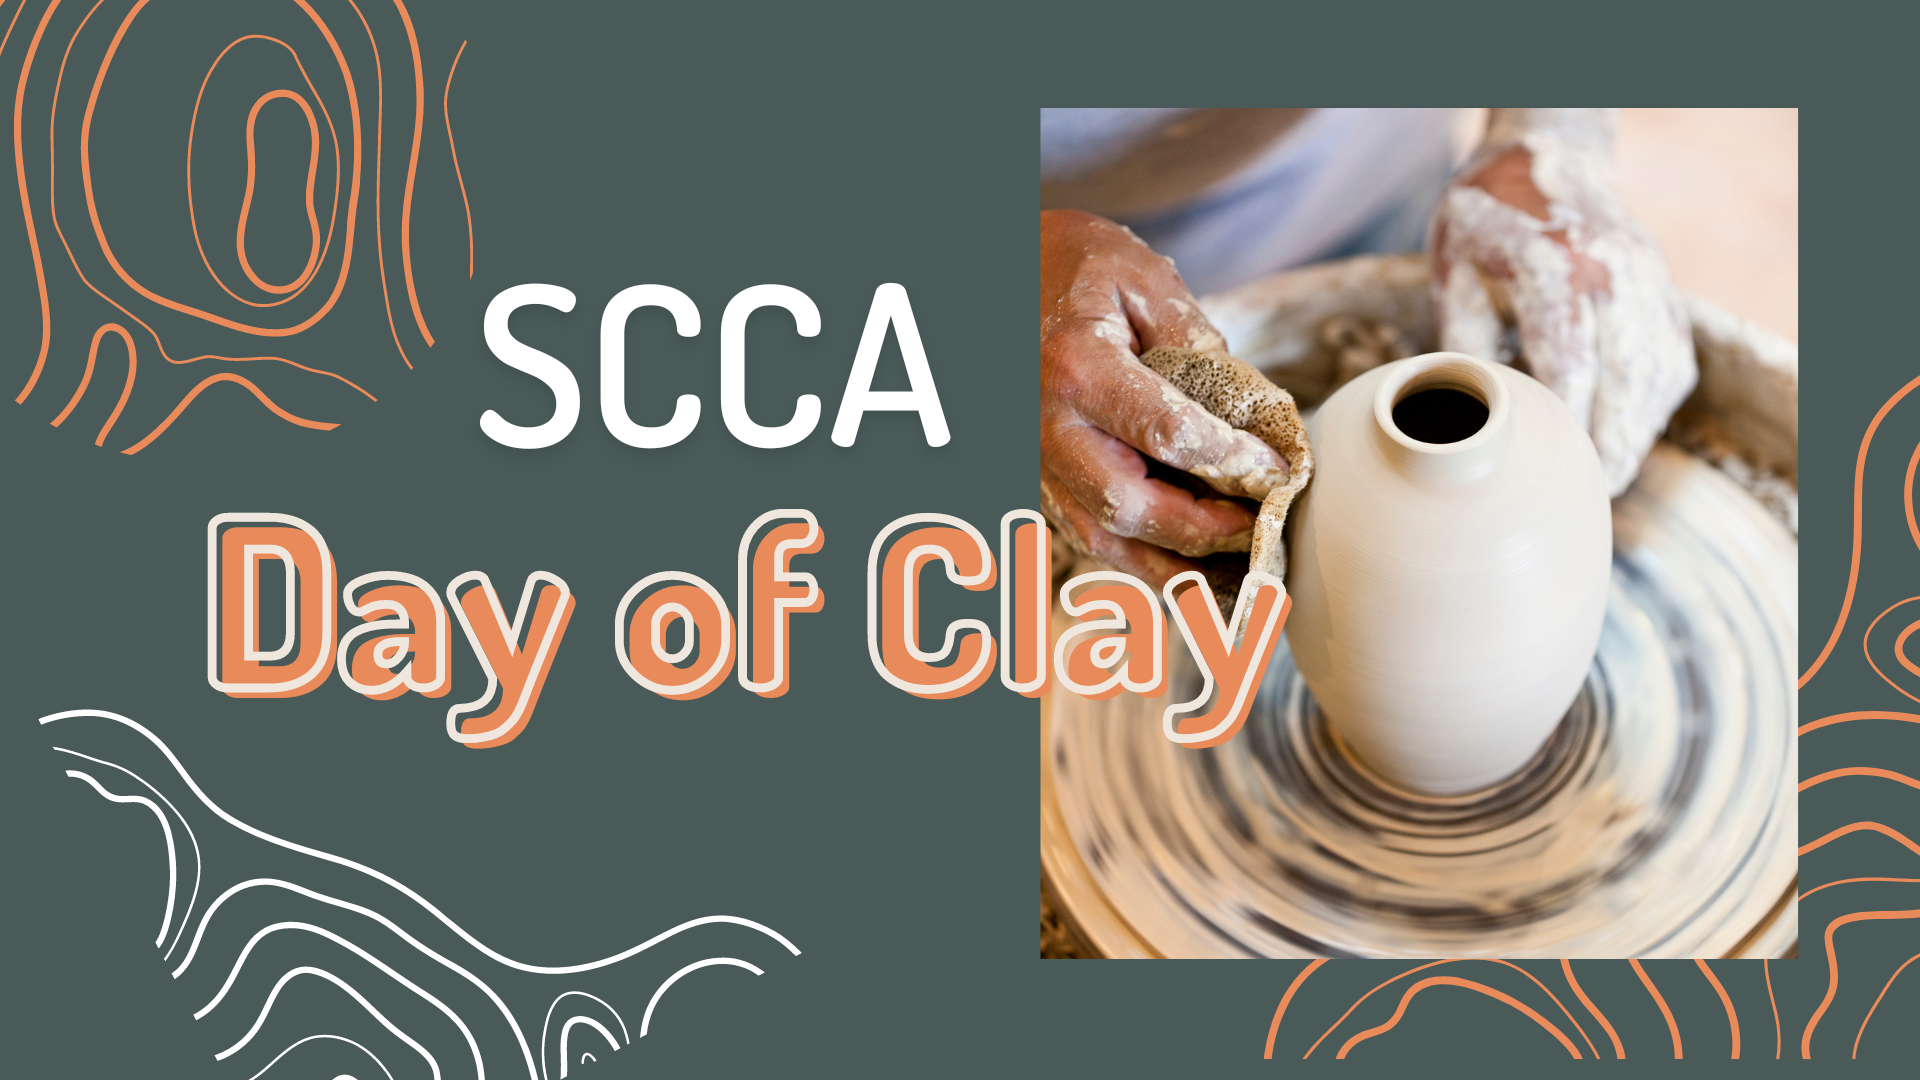 Scenic City Clay Arts